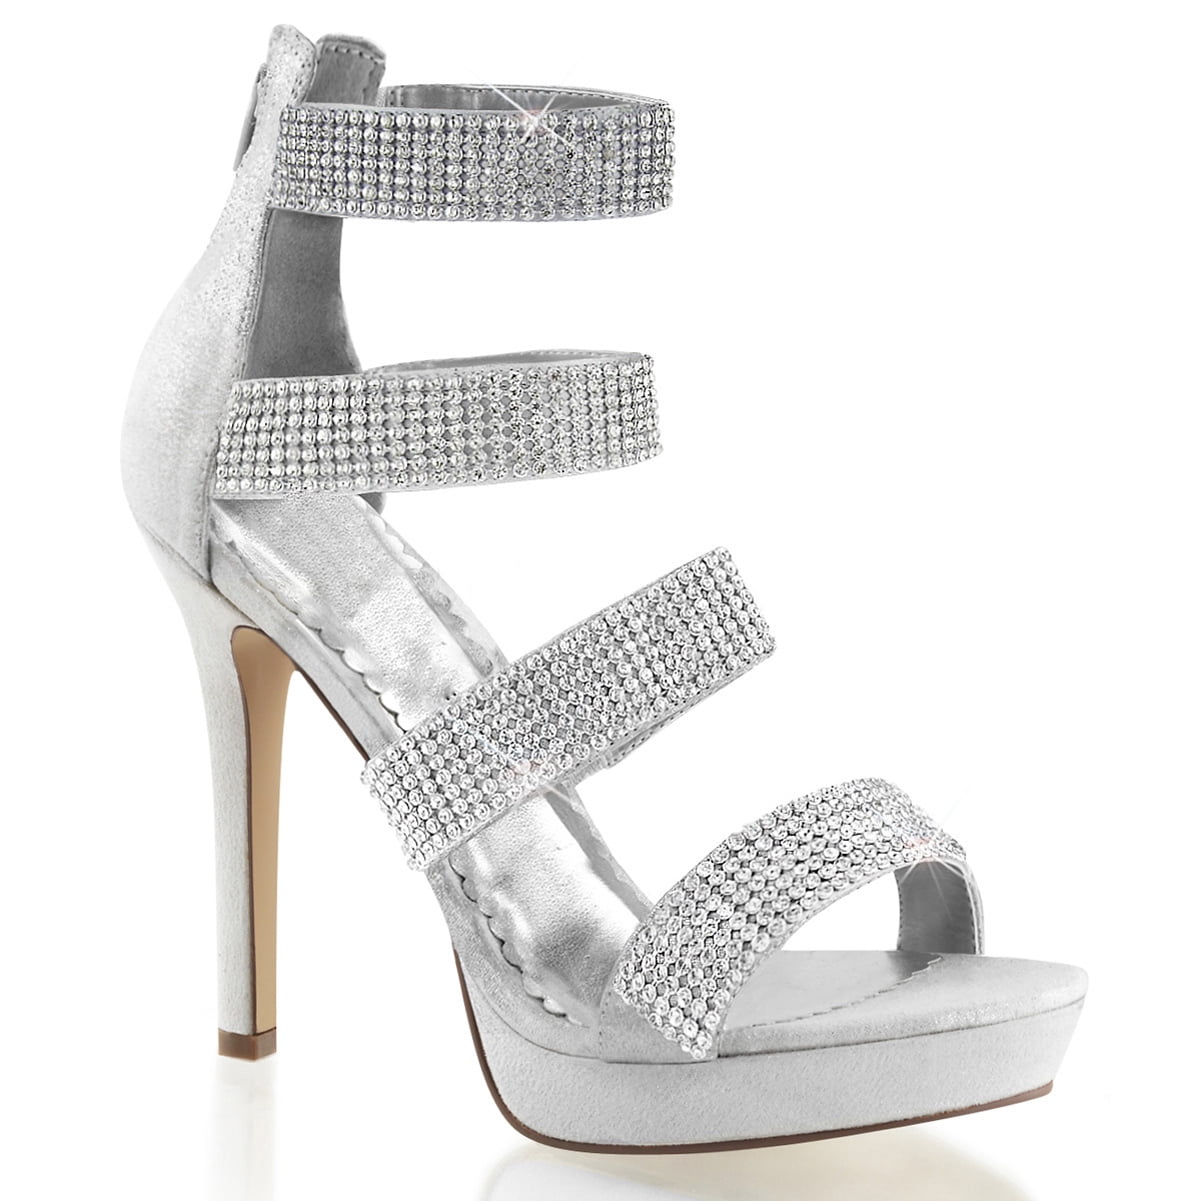 4 inch silver heels